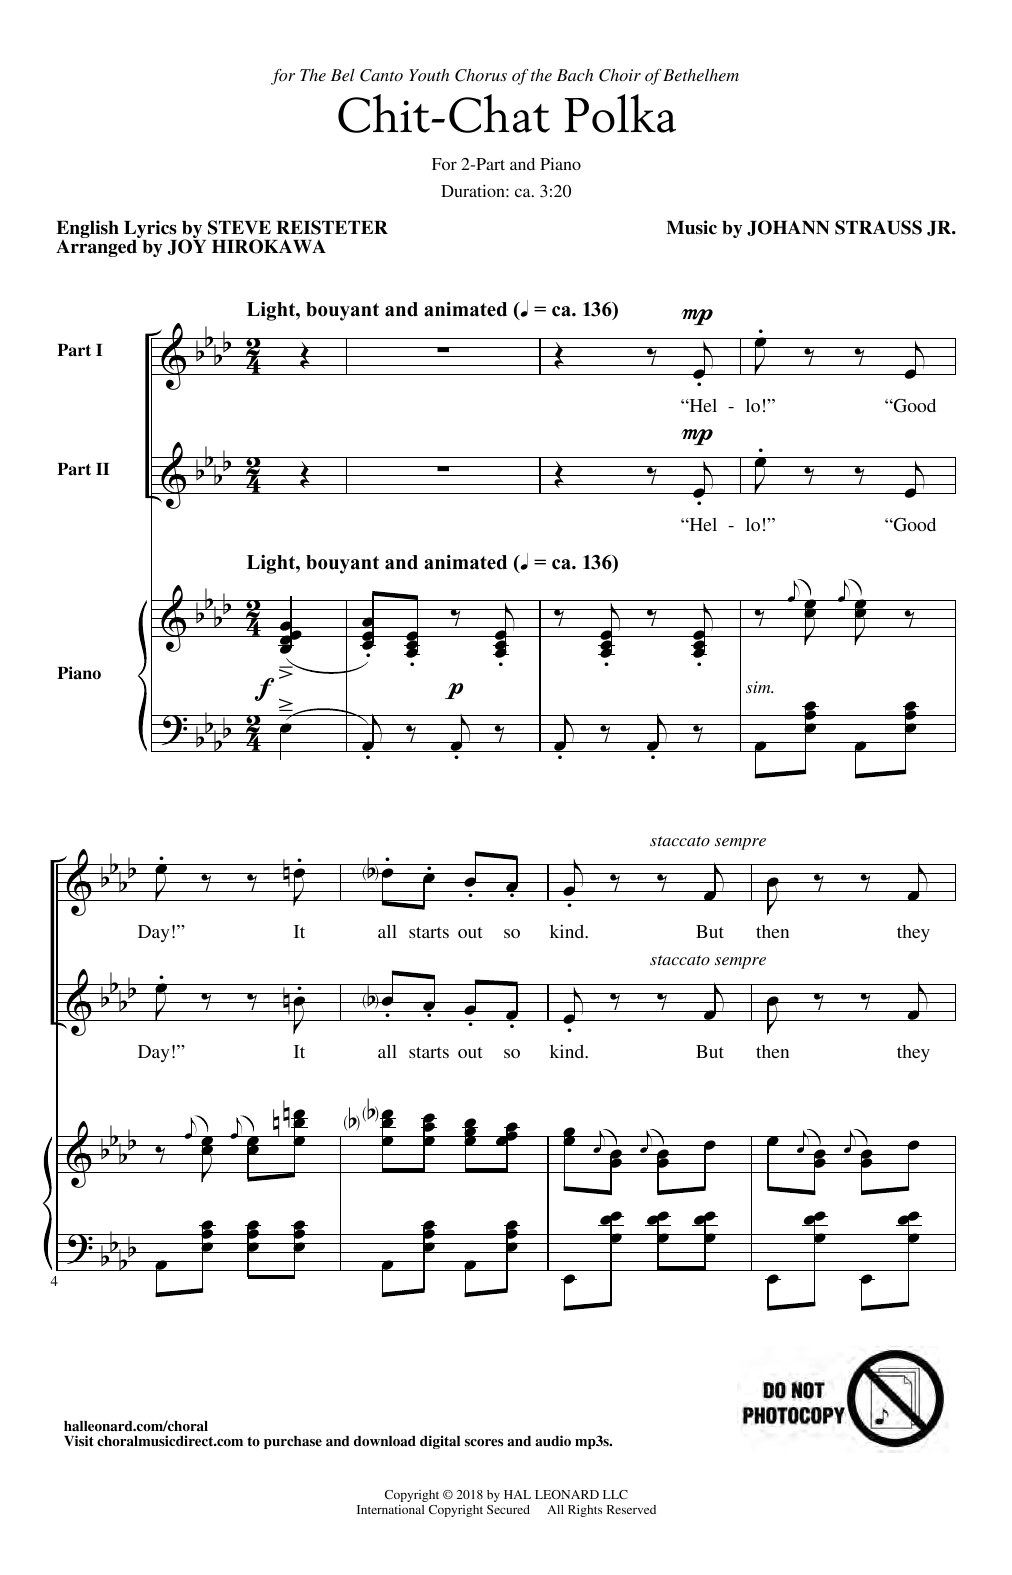 Johann Strauss Jr. Chit-Chat Polka (arr. Joy Hirokawa) Sheet Music Notes & Chords for 2-Part Choir - Download or Print PDF